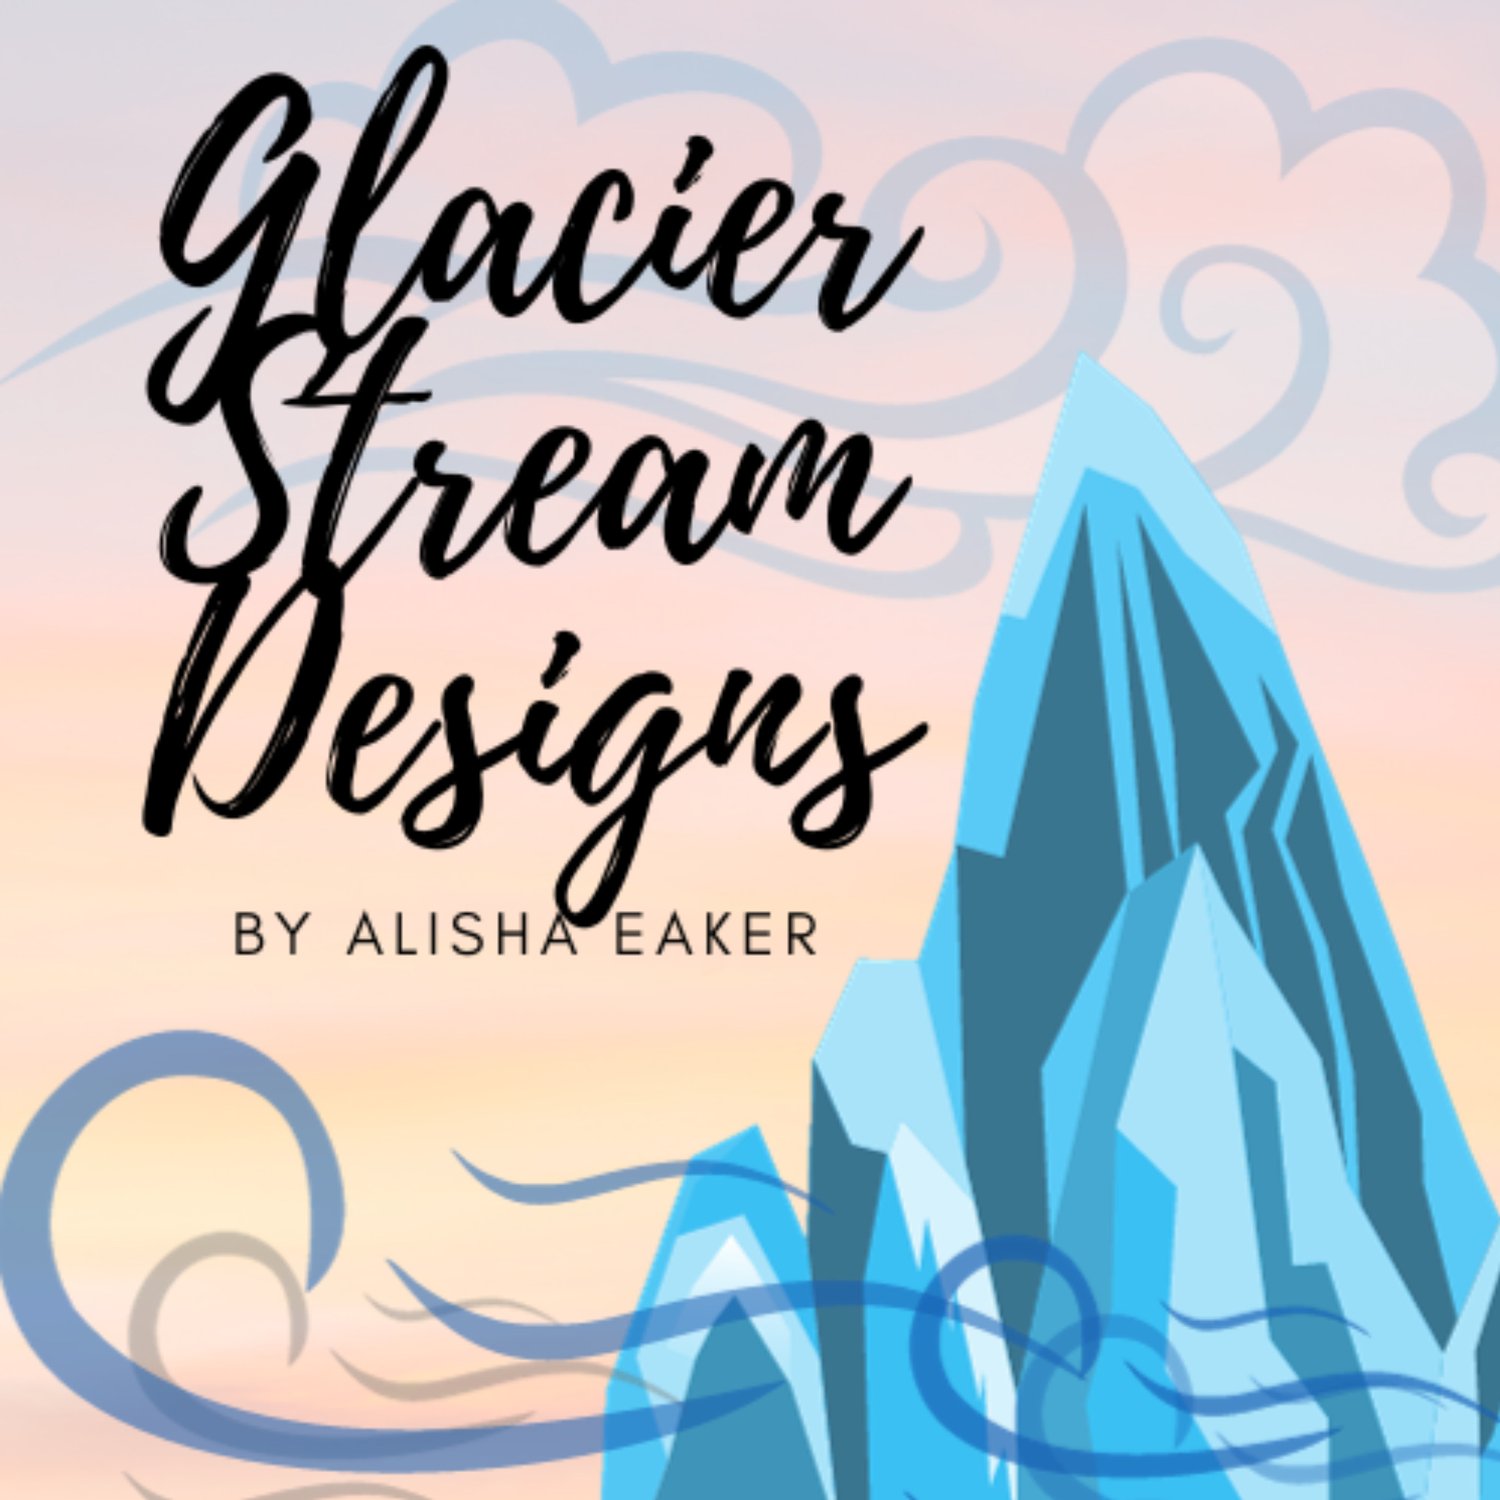 Glacier Stream Designs